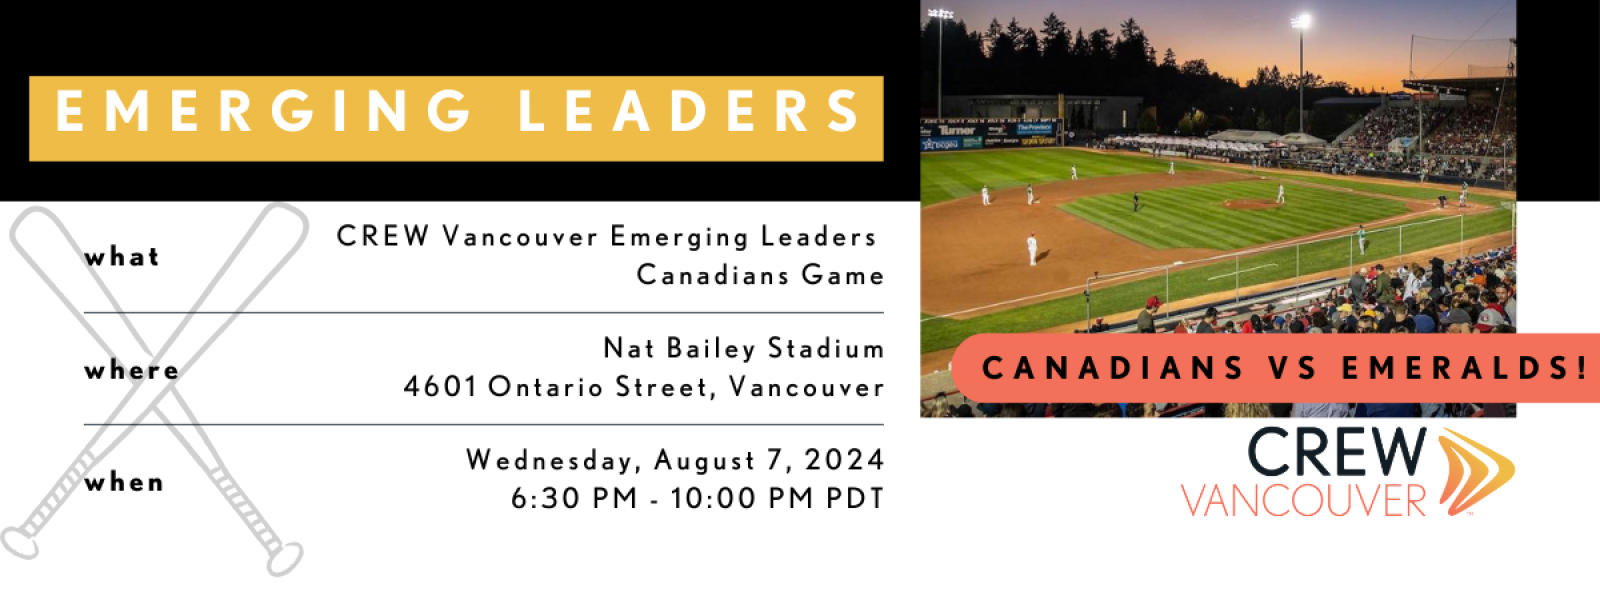 CREW Vancouver Event emerging leaders baseball LT 3